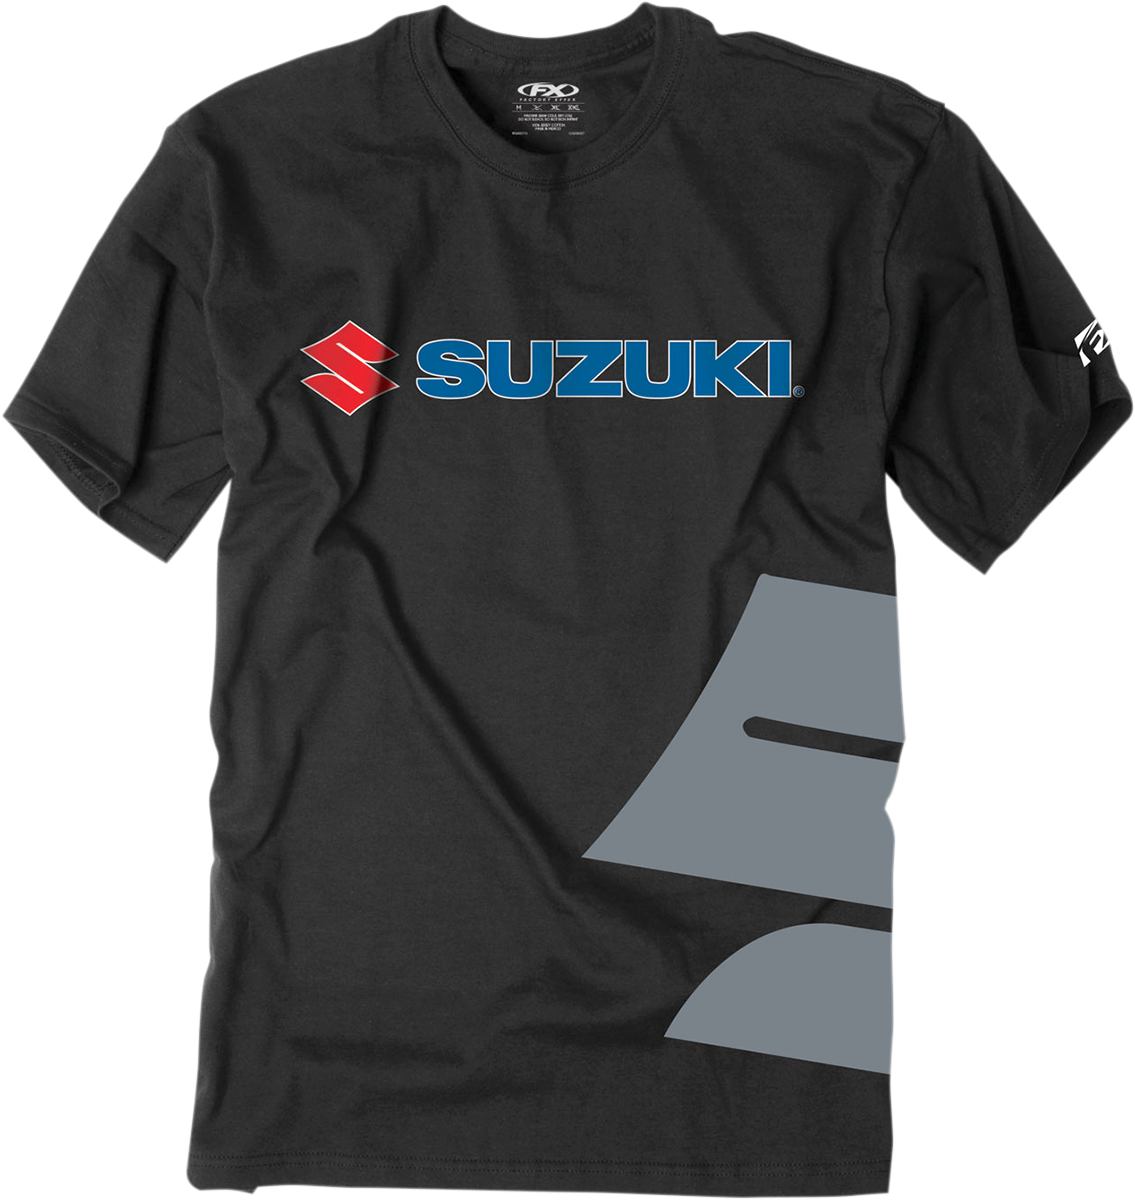 FACTORY EFFEX Suzuki Big S T-Shirt - Black - Medium 15-88470